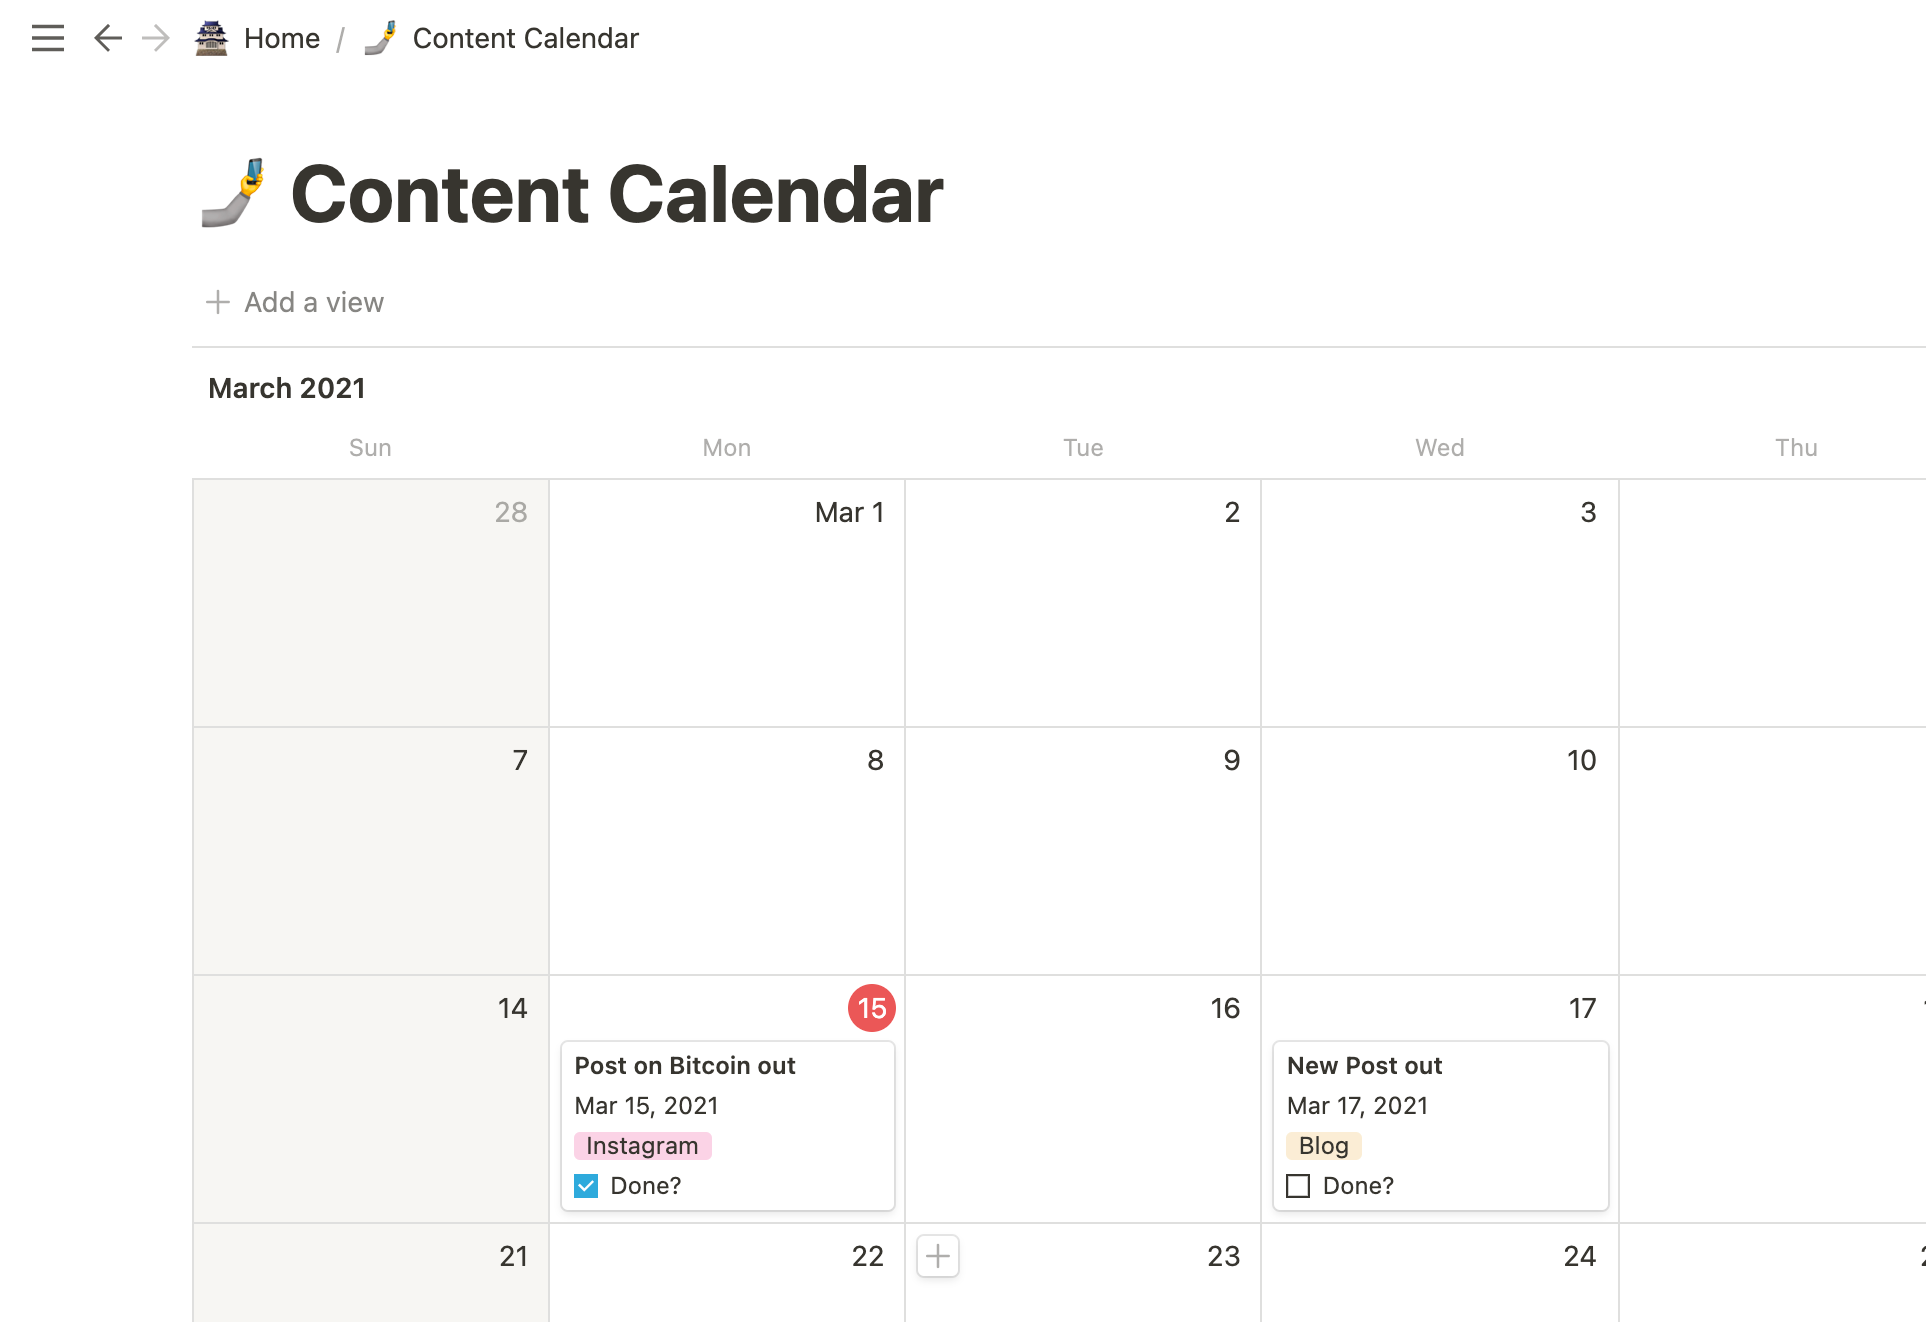 A content calendar in Notion's calendar view